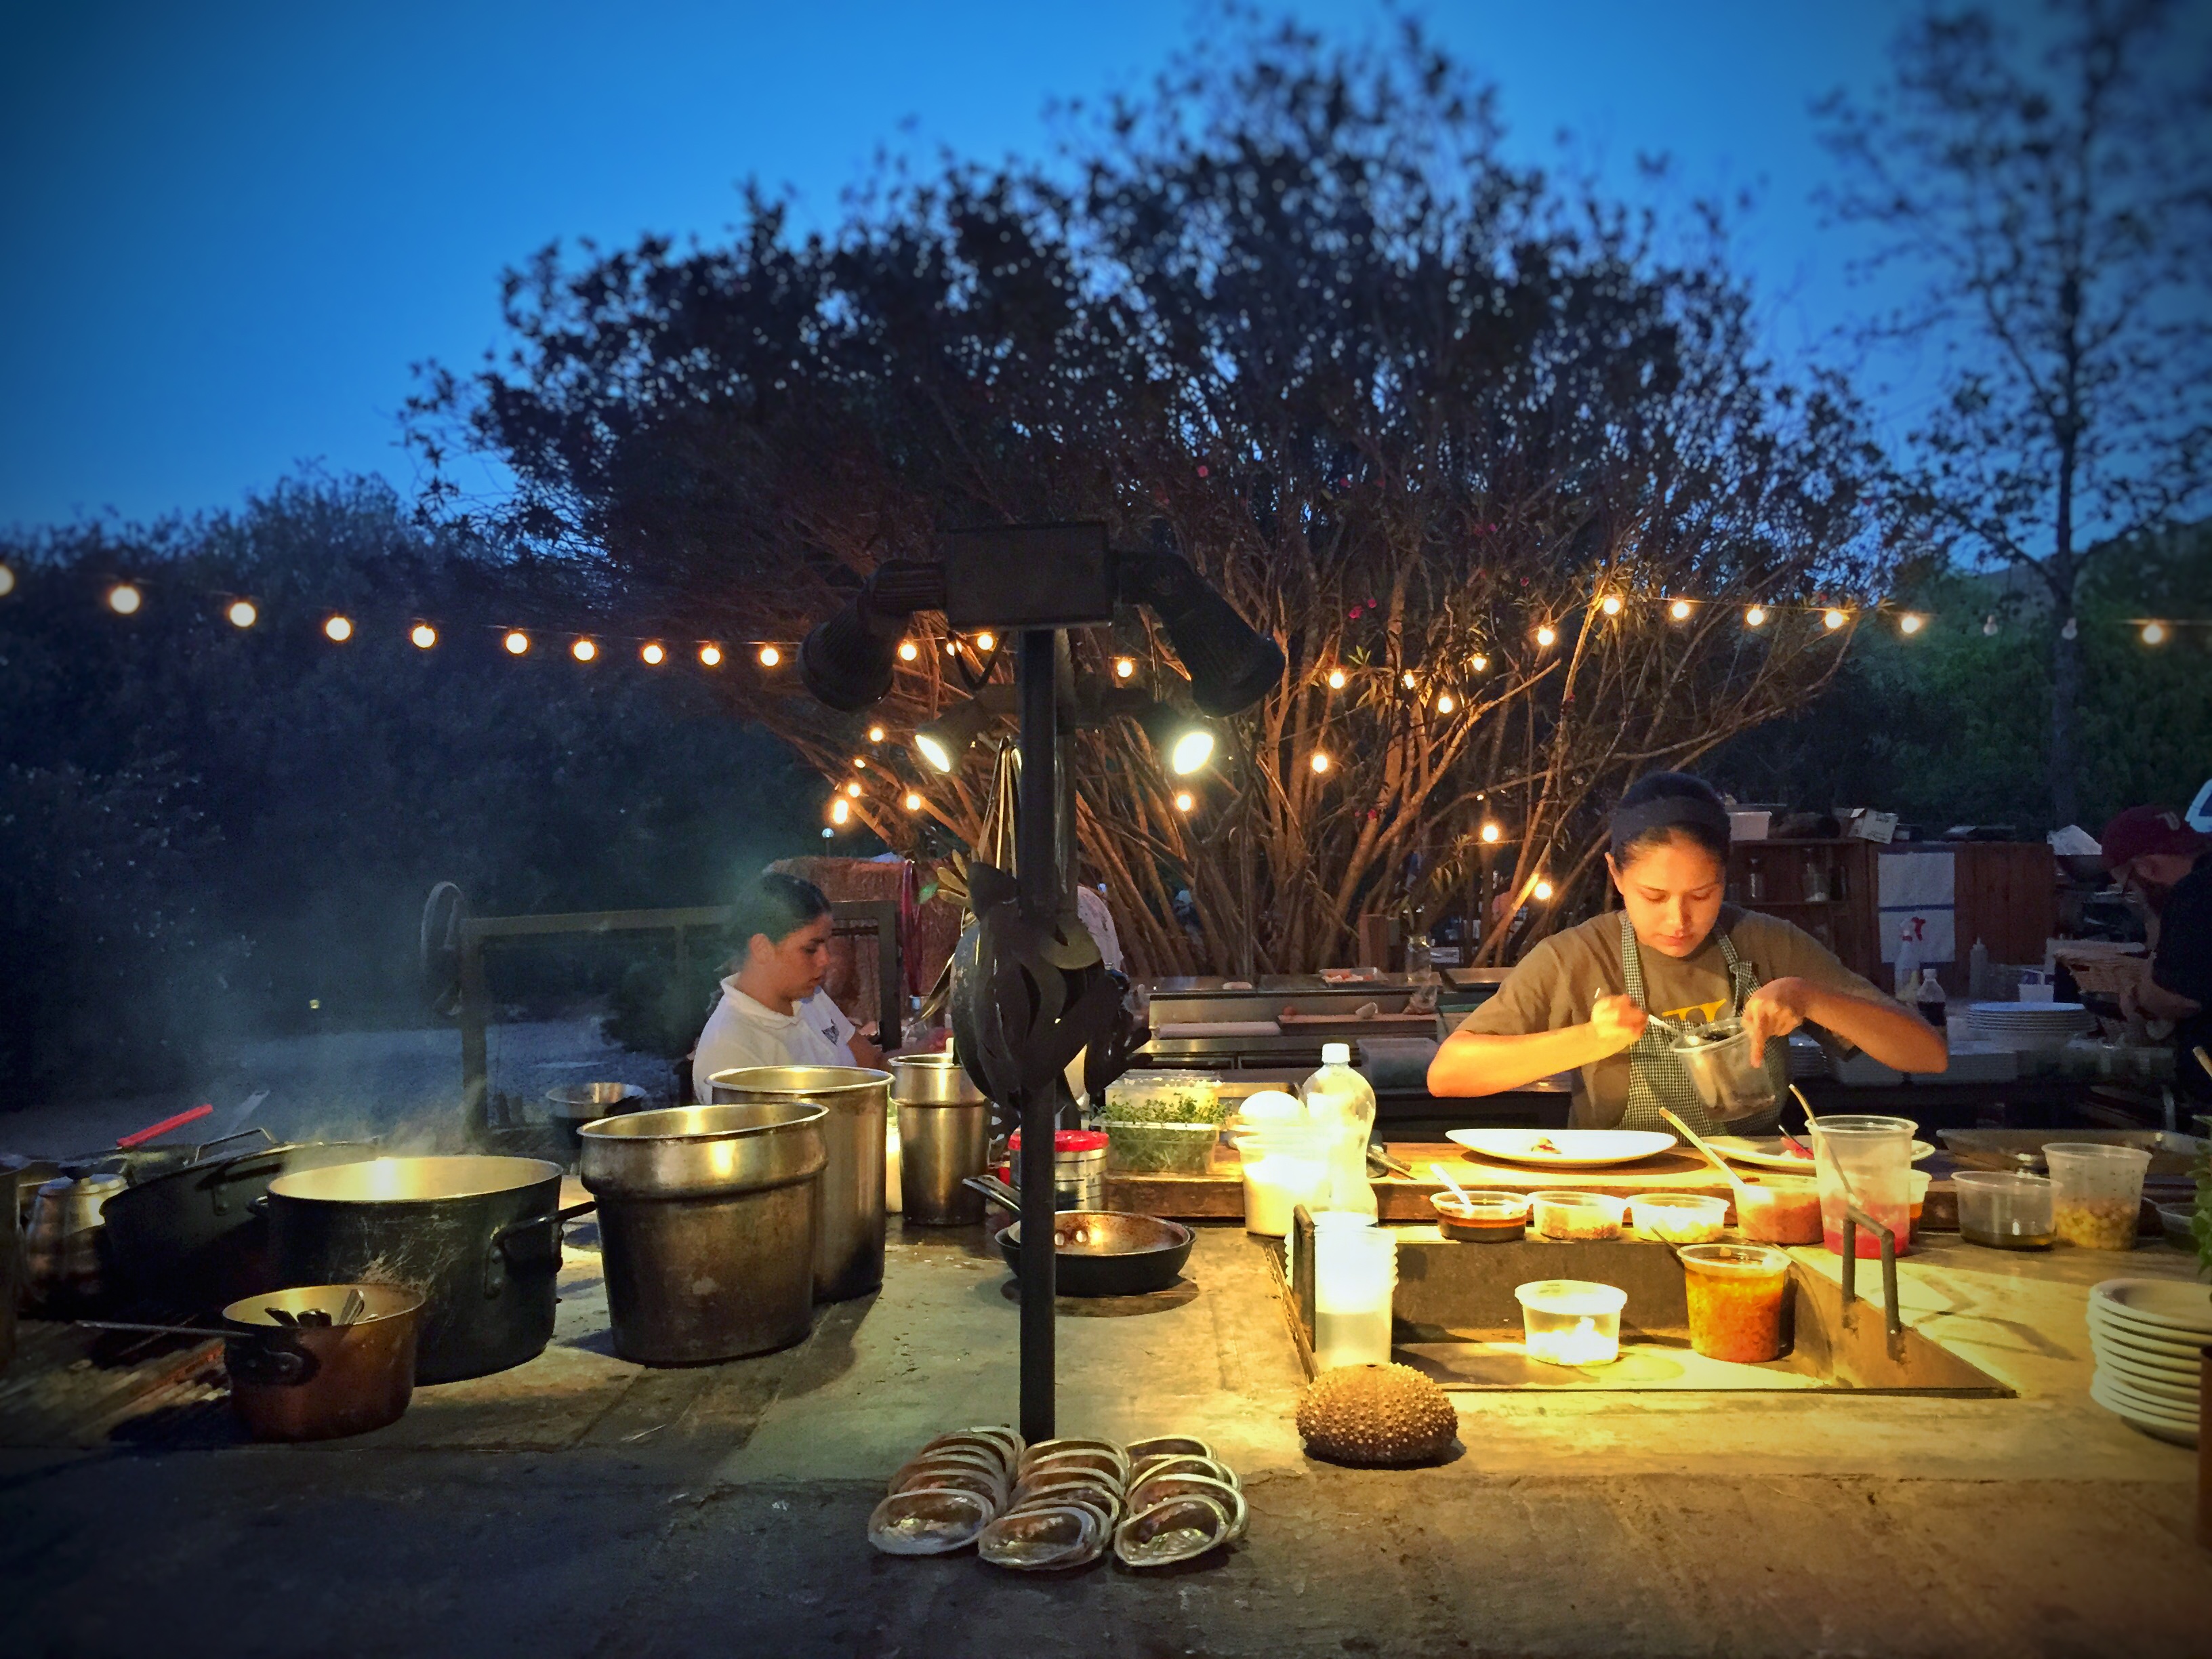 Outdoor kitchen with staff preparing food